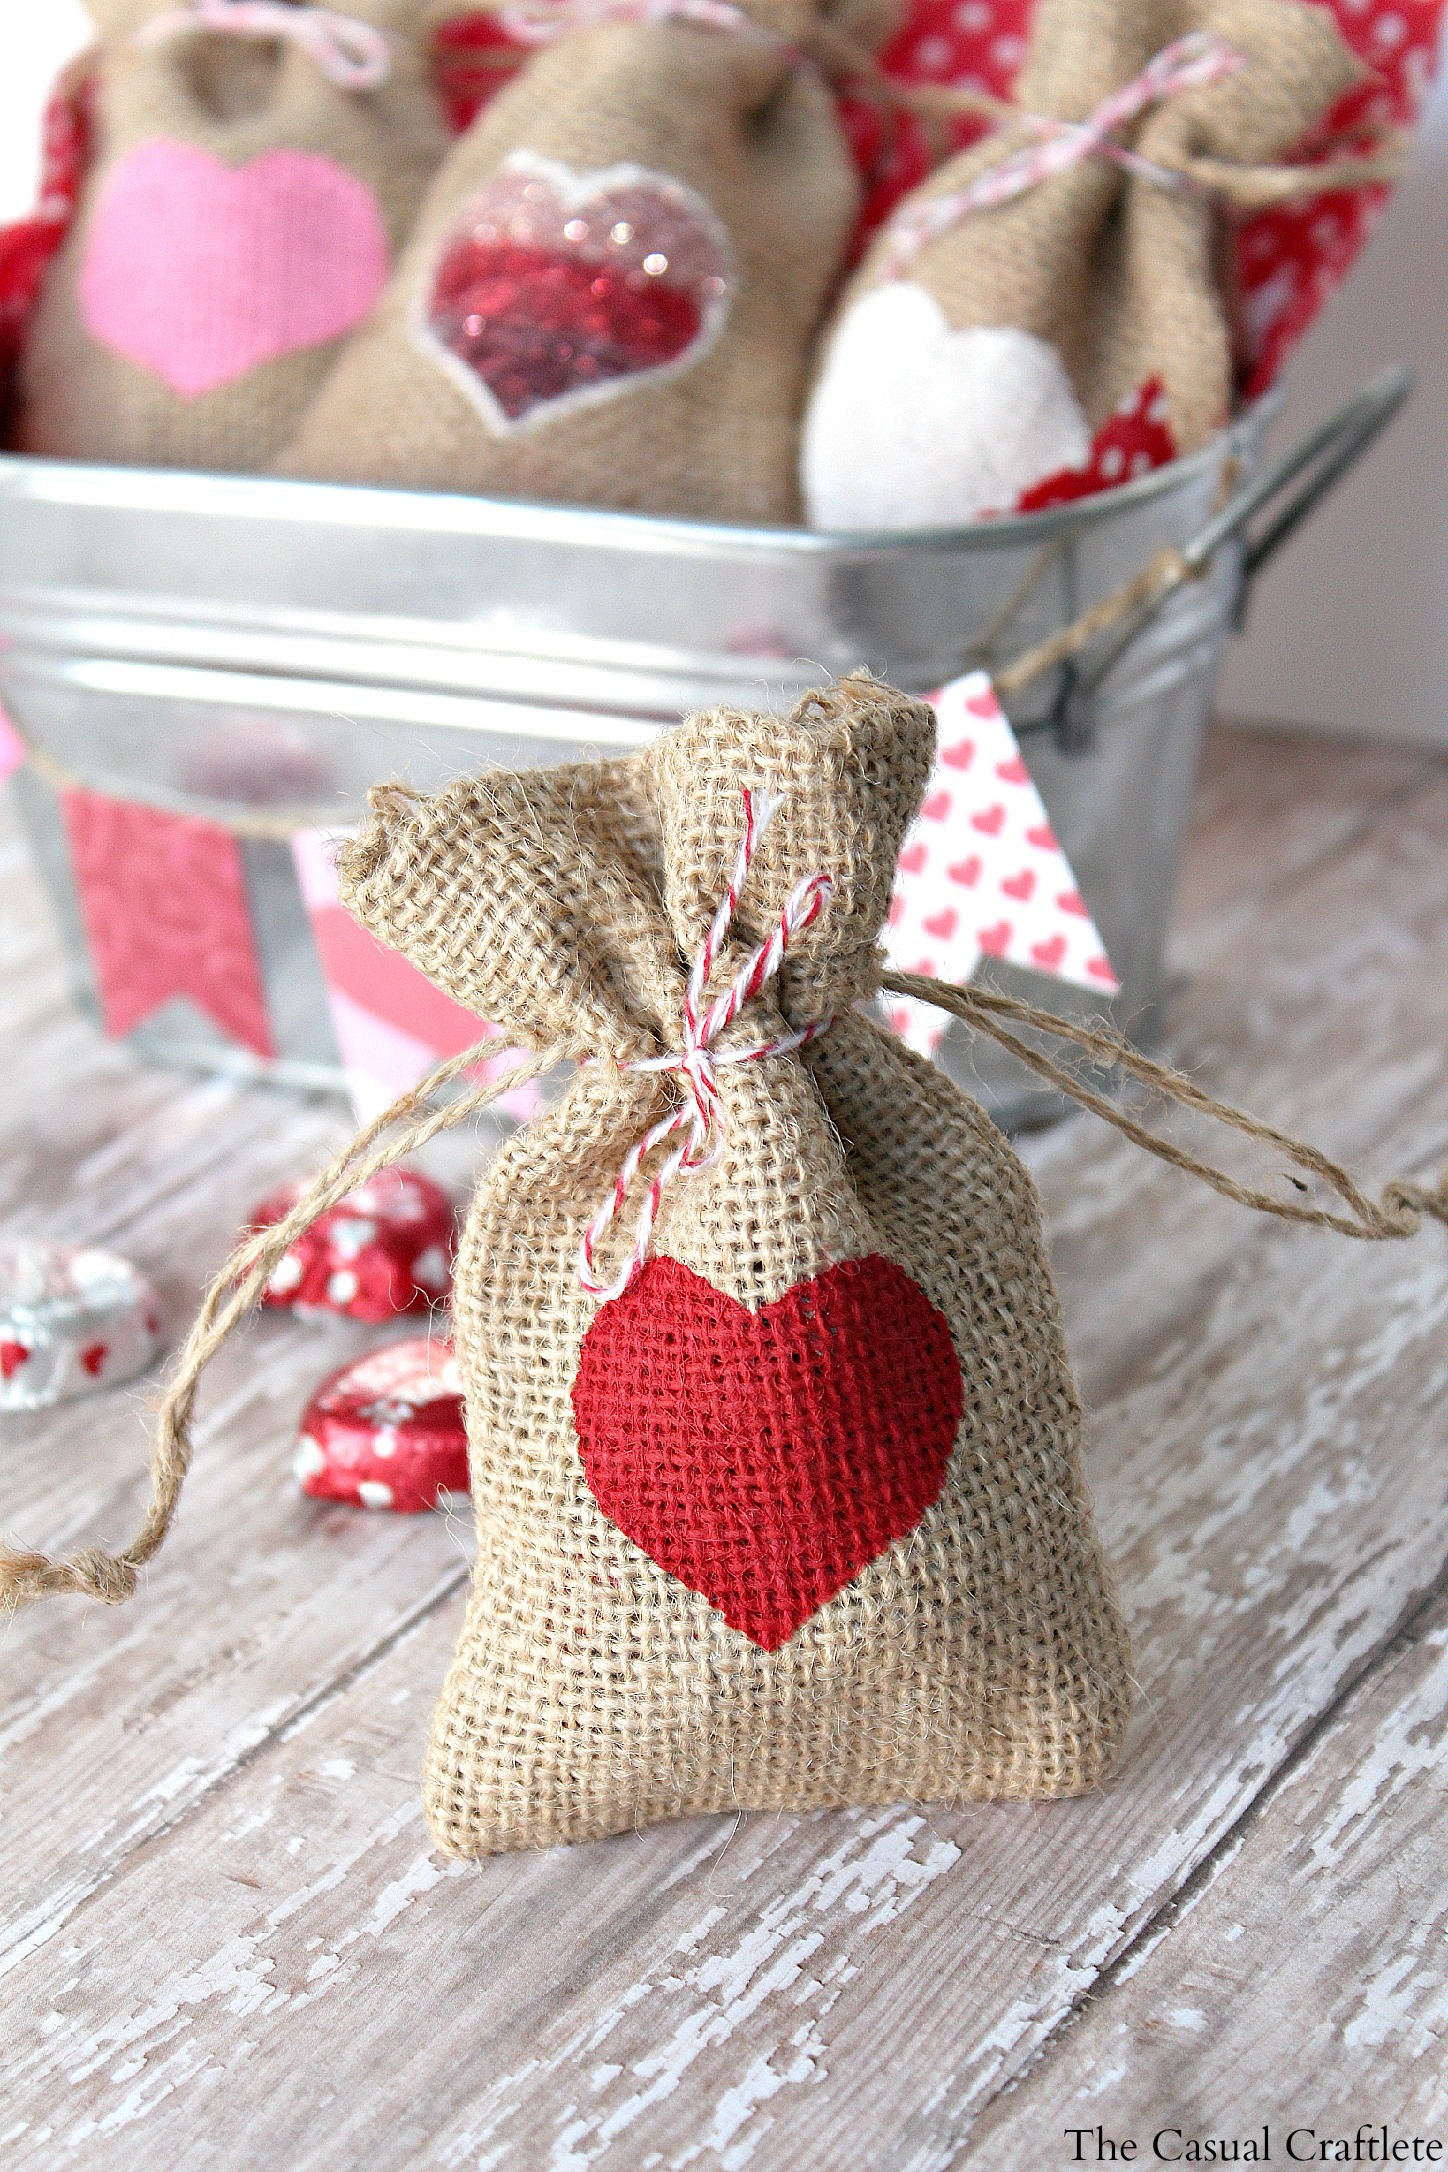 Valentines Gift DIY
 DIY Valentine s Day Burlap Gift Bags